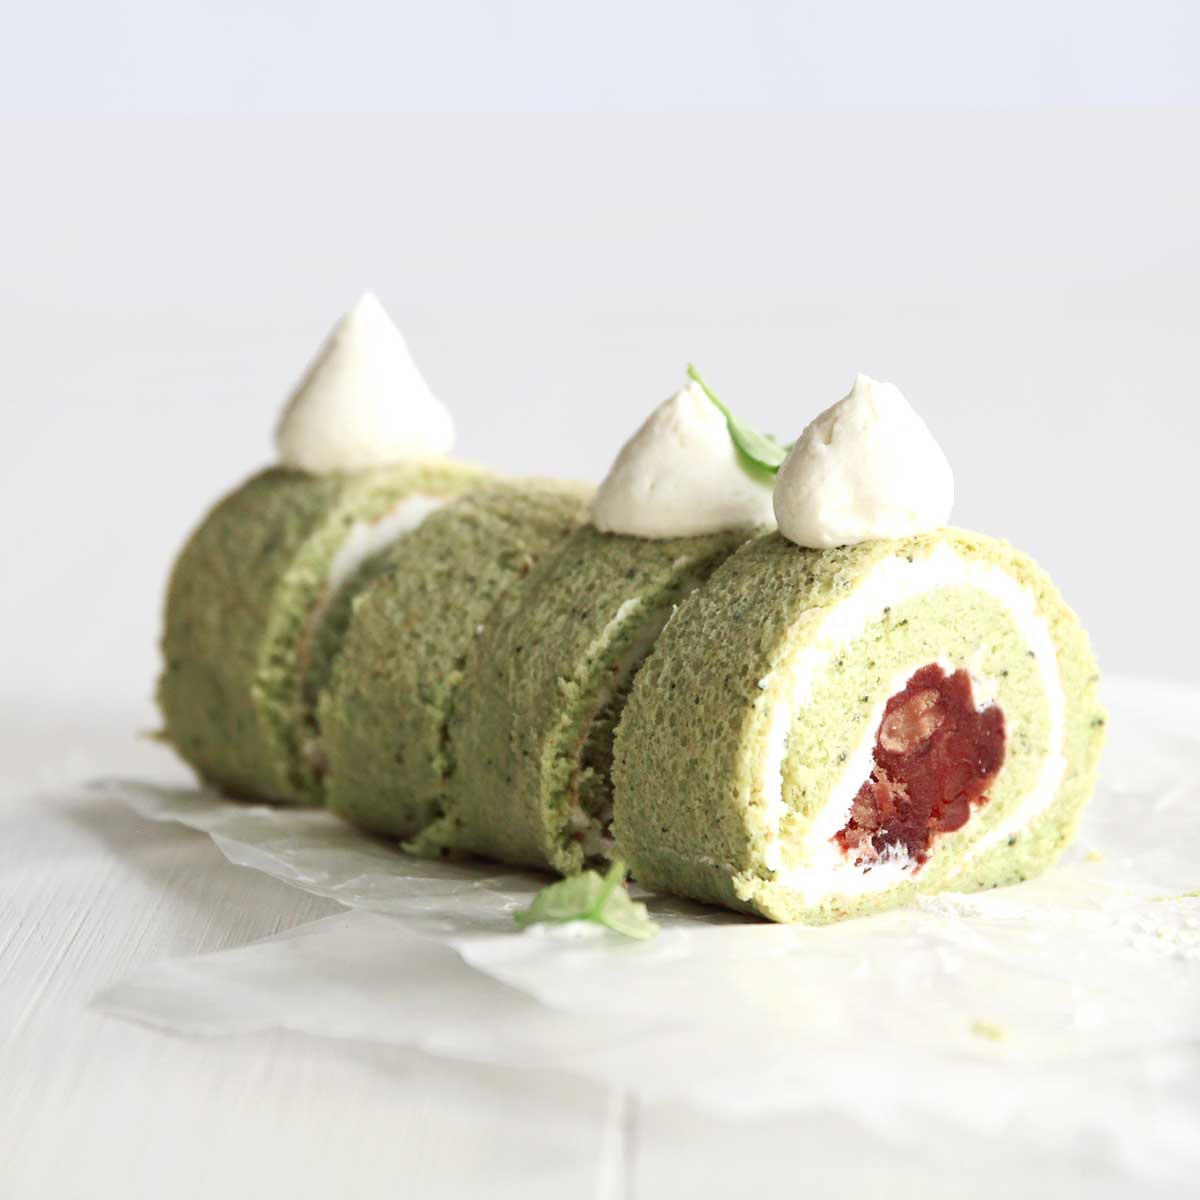 Gluten Free Japanese Matcha Roll Cake with a Sweet Adzuki Filling - Vegan Scones with Cornstarch